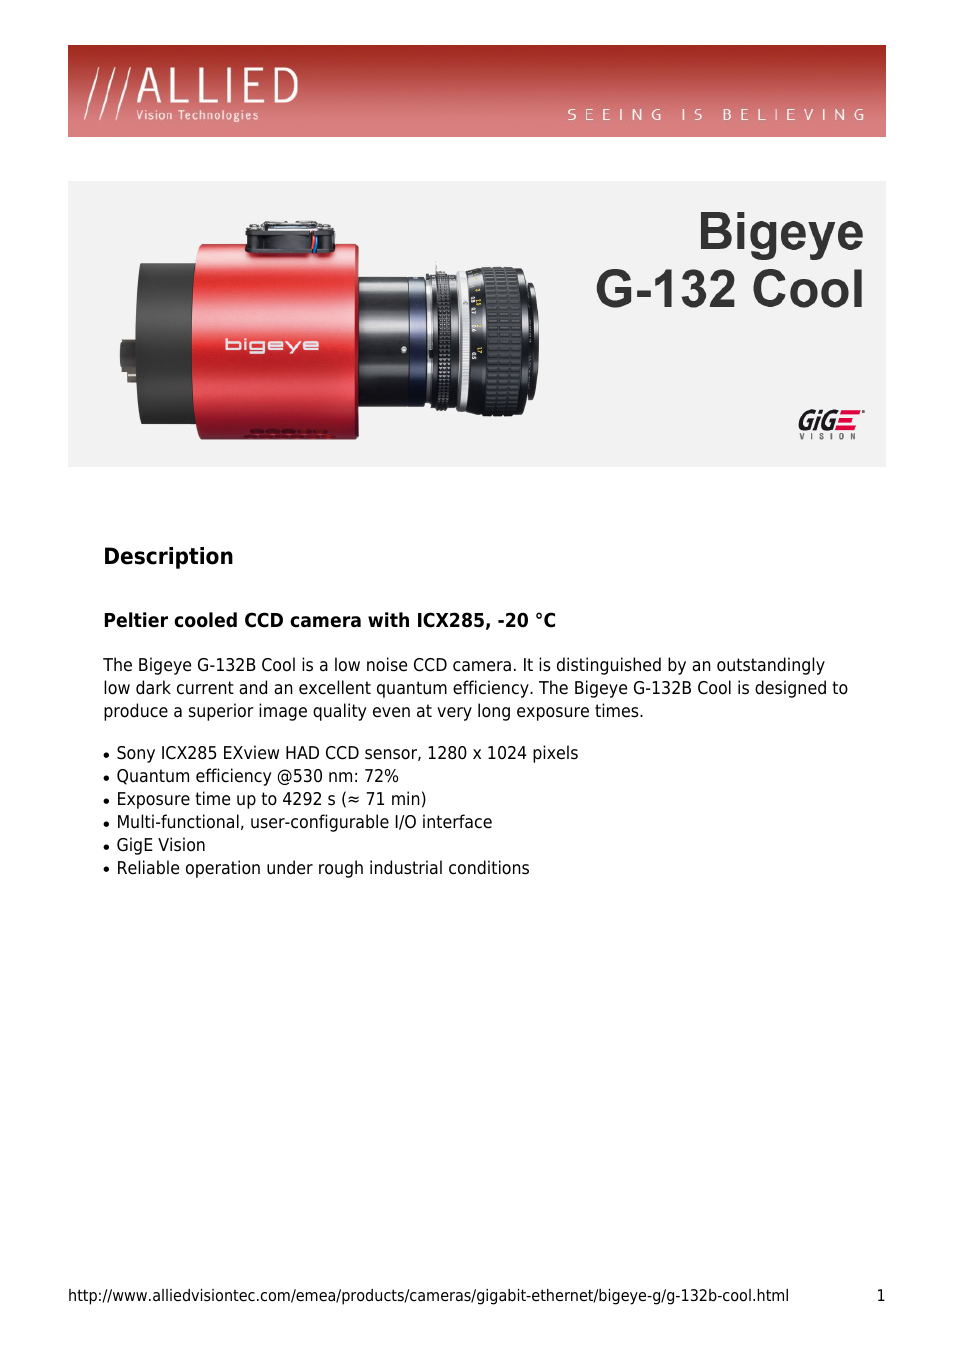 Bigeye G-132 Cool